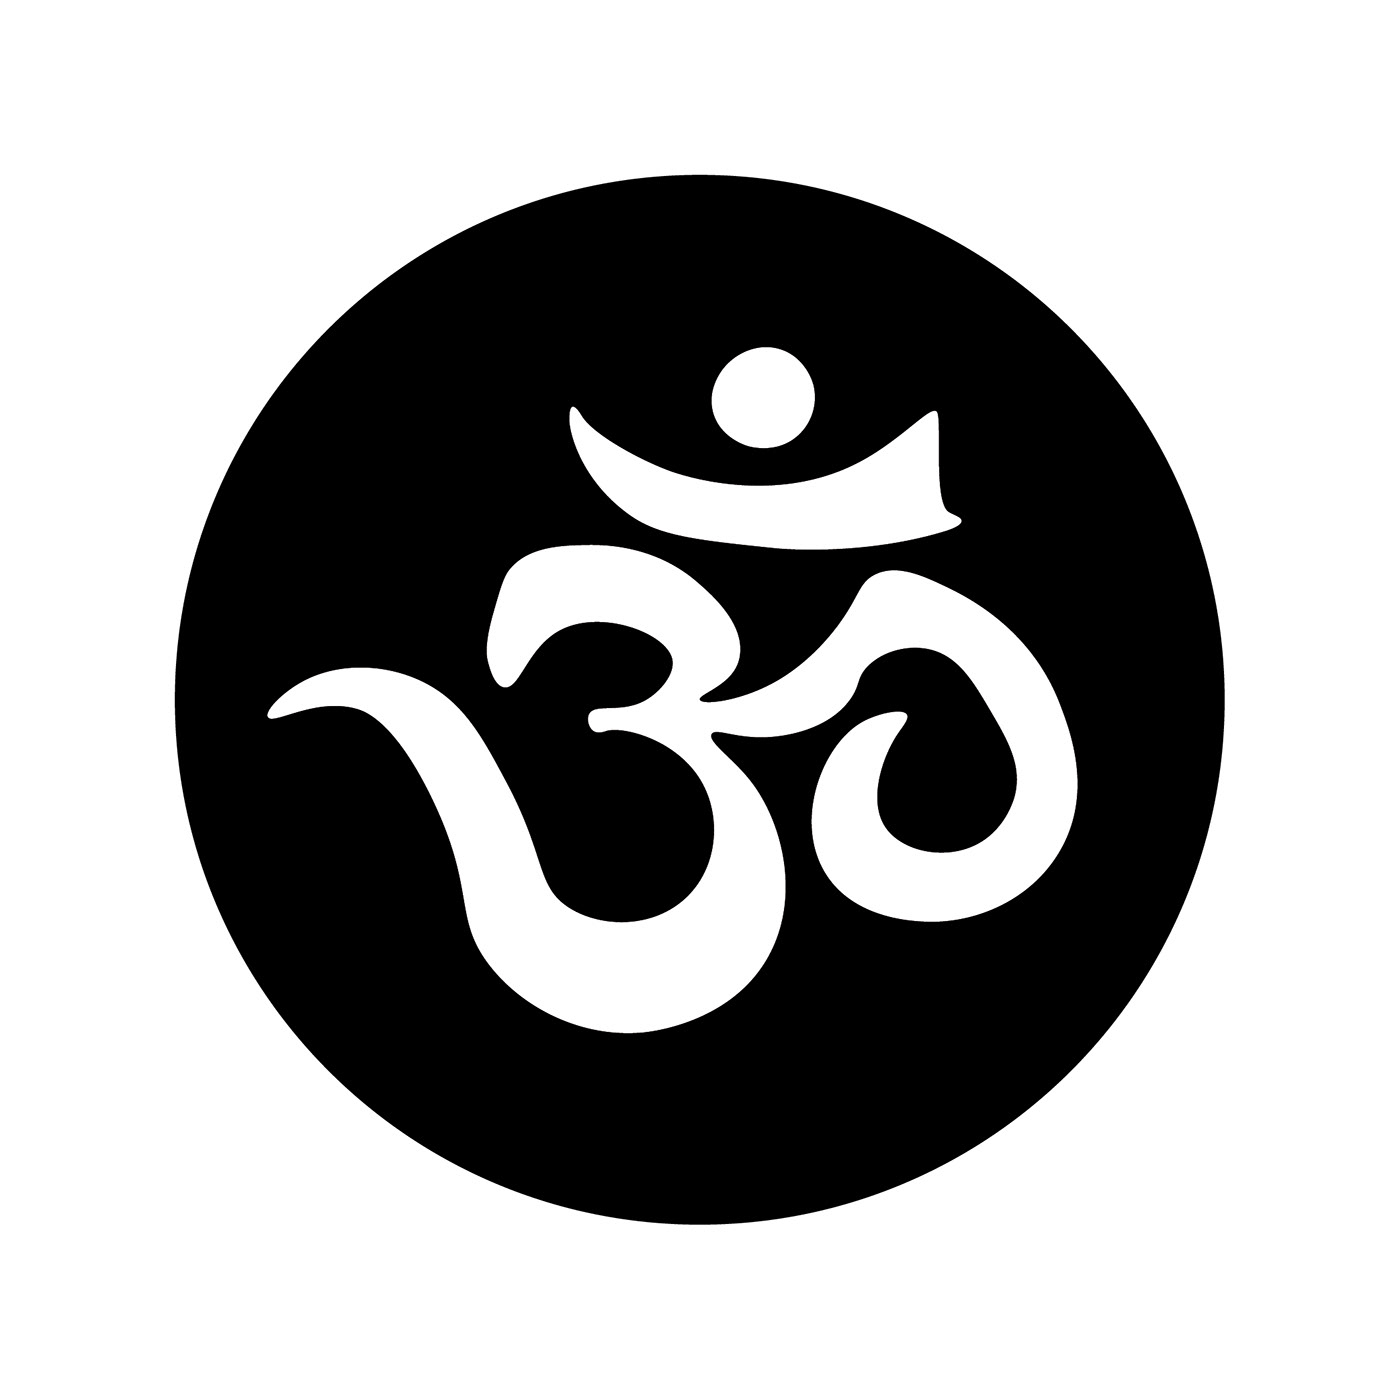 aum Hinduism symbol sign Om Aum Om sound vibration symbol cosmos yoga meditation icon